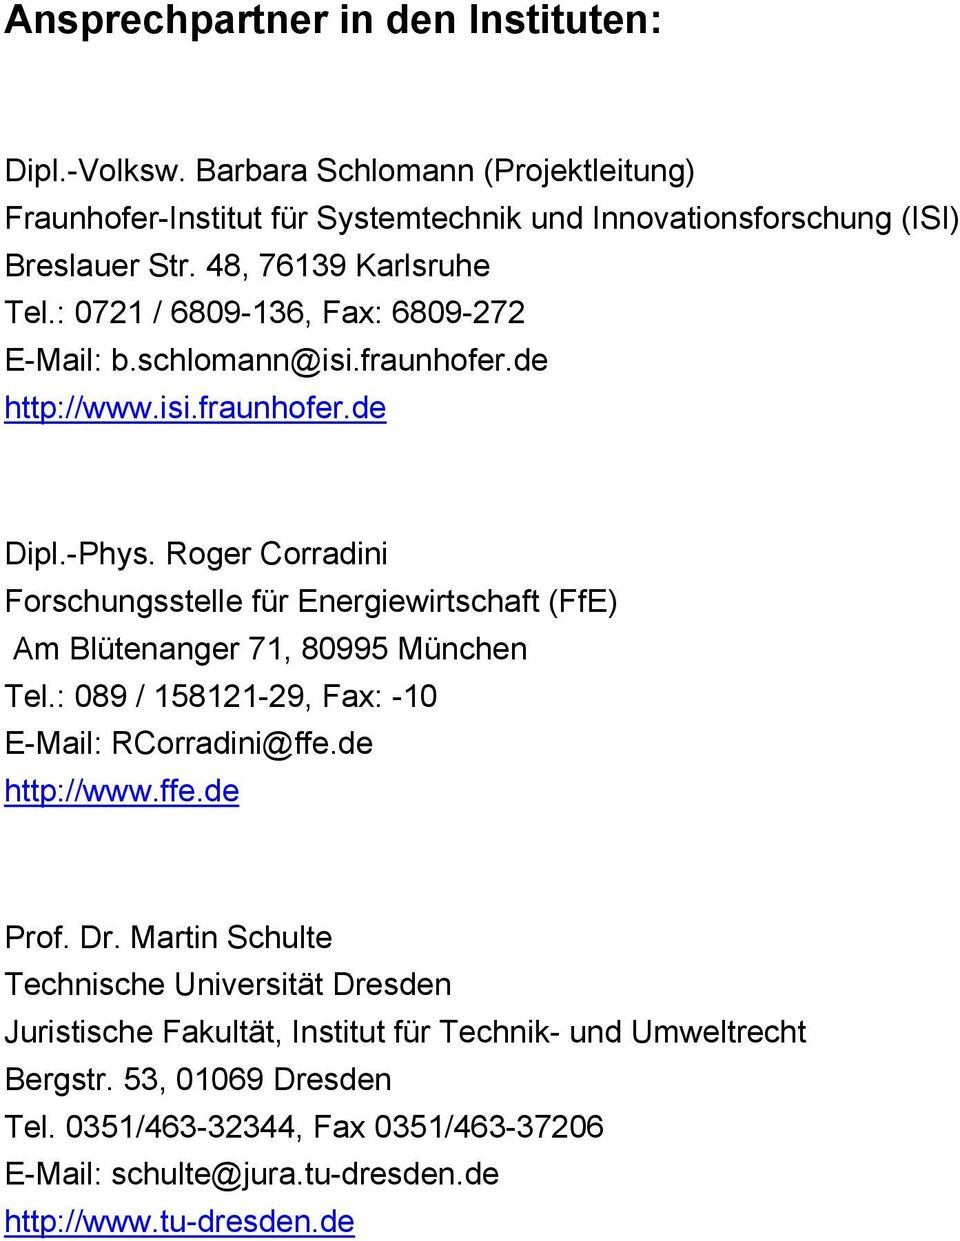 Roger Corradini Forschungsstelle für Energiewirtschaft (FfE) Am Blütenanger 71, 80995 München Tel.: 089 / 158121-29, Fax: -10 E-Mail: RCorradini@ffe.de http://www.ffe.de Prof. Dr.